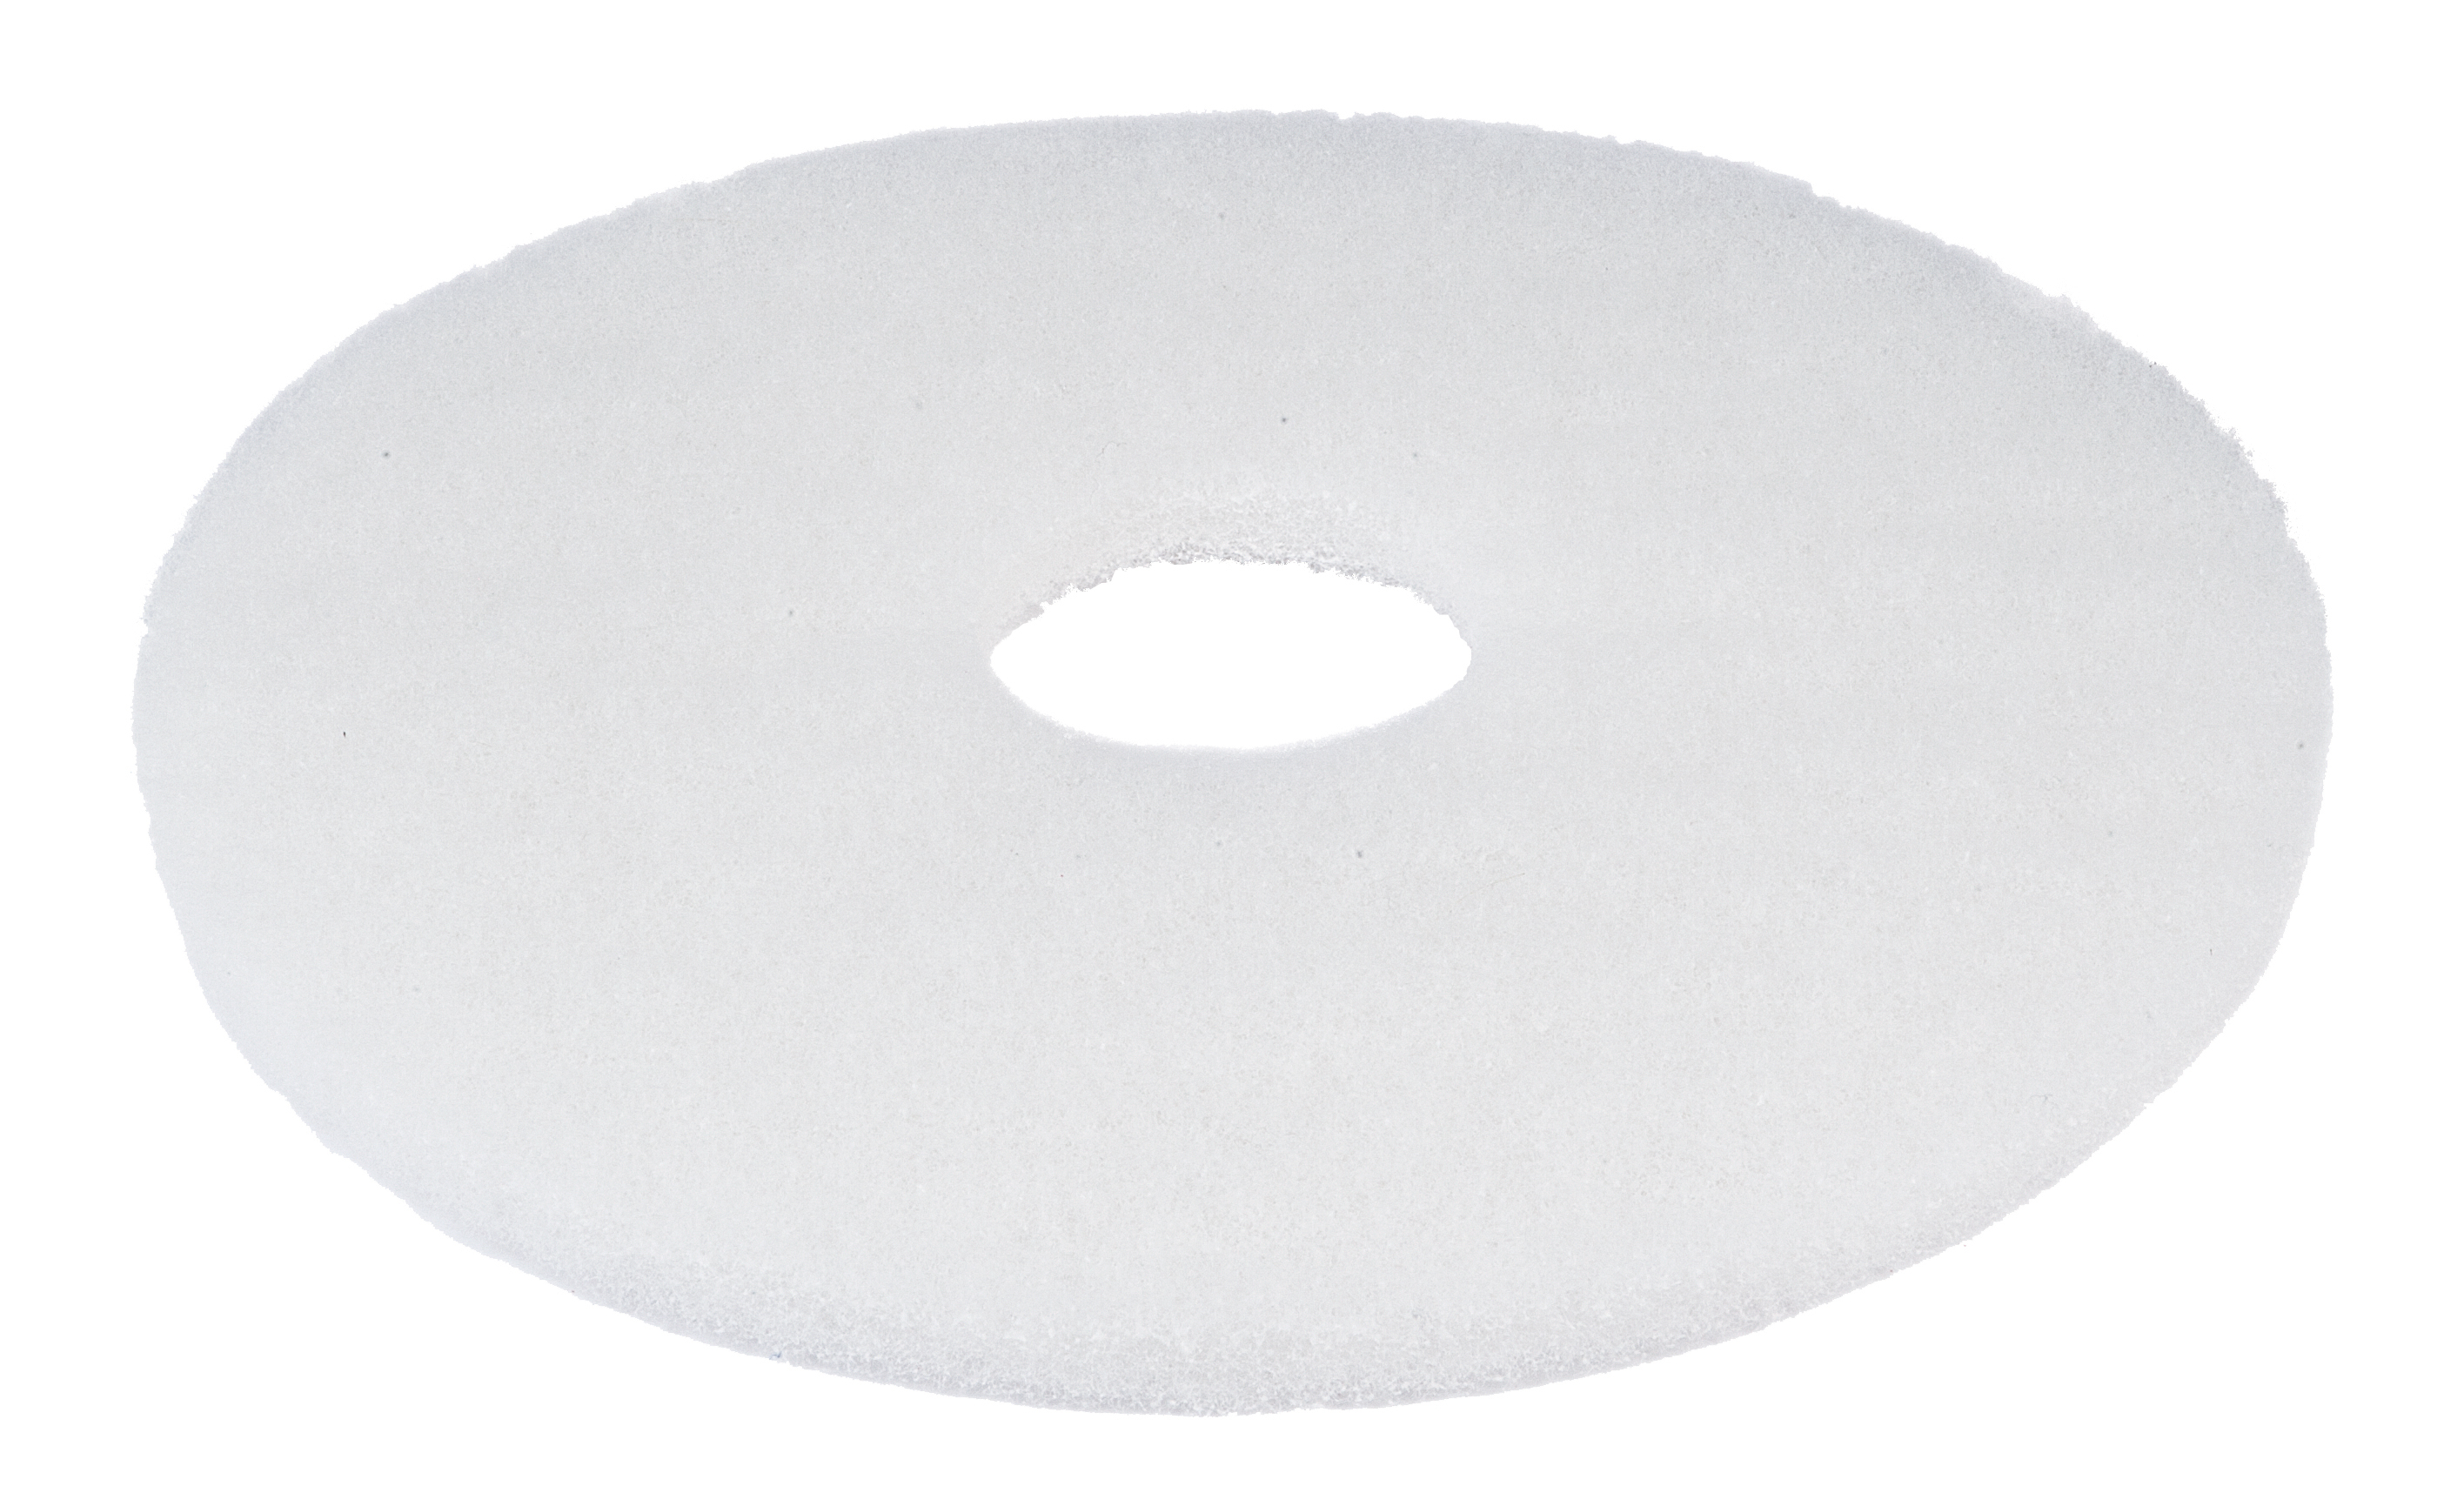 Superpad Nylon, weiß, 20 mm dick, 16 Zoll